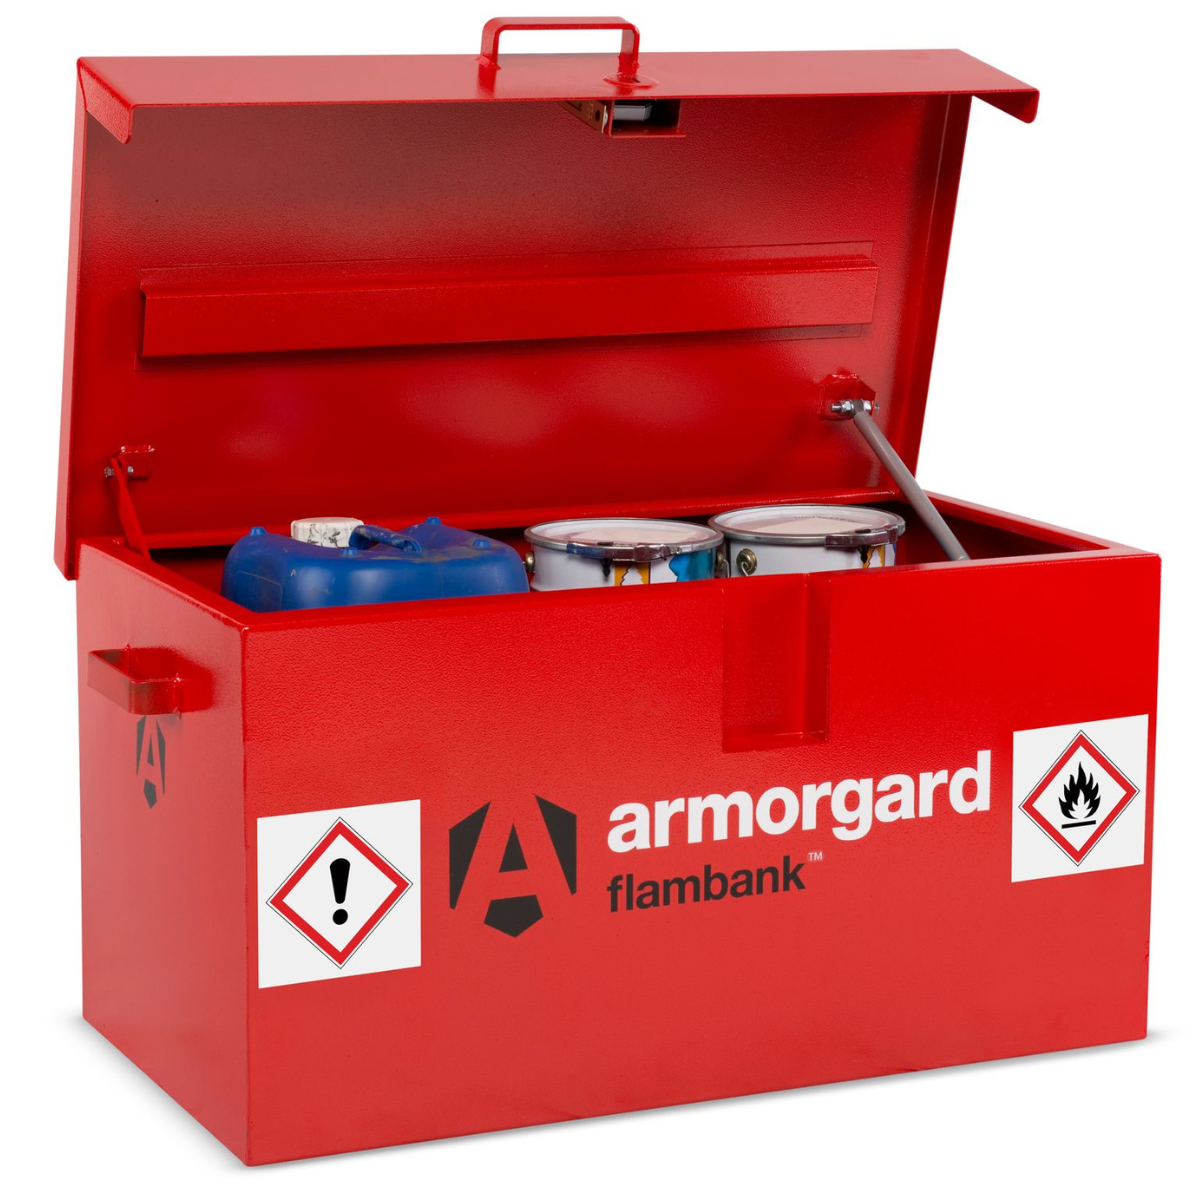 Armorgard FB1 Flam Bank Van Box 995x540x485mm